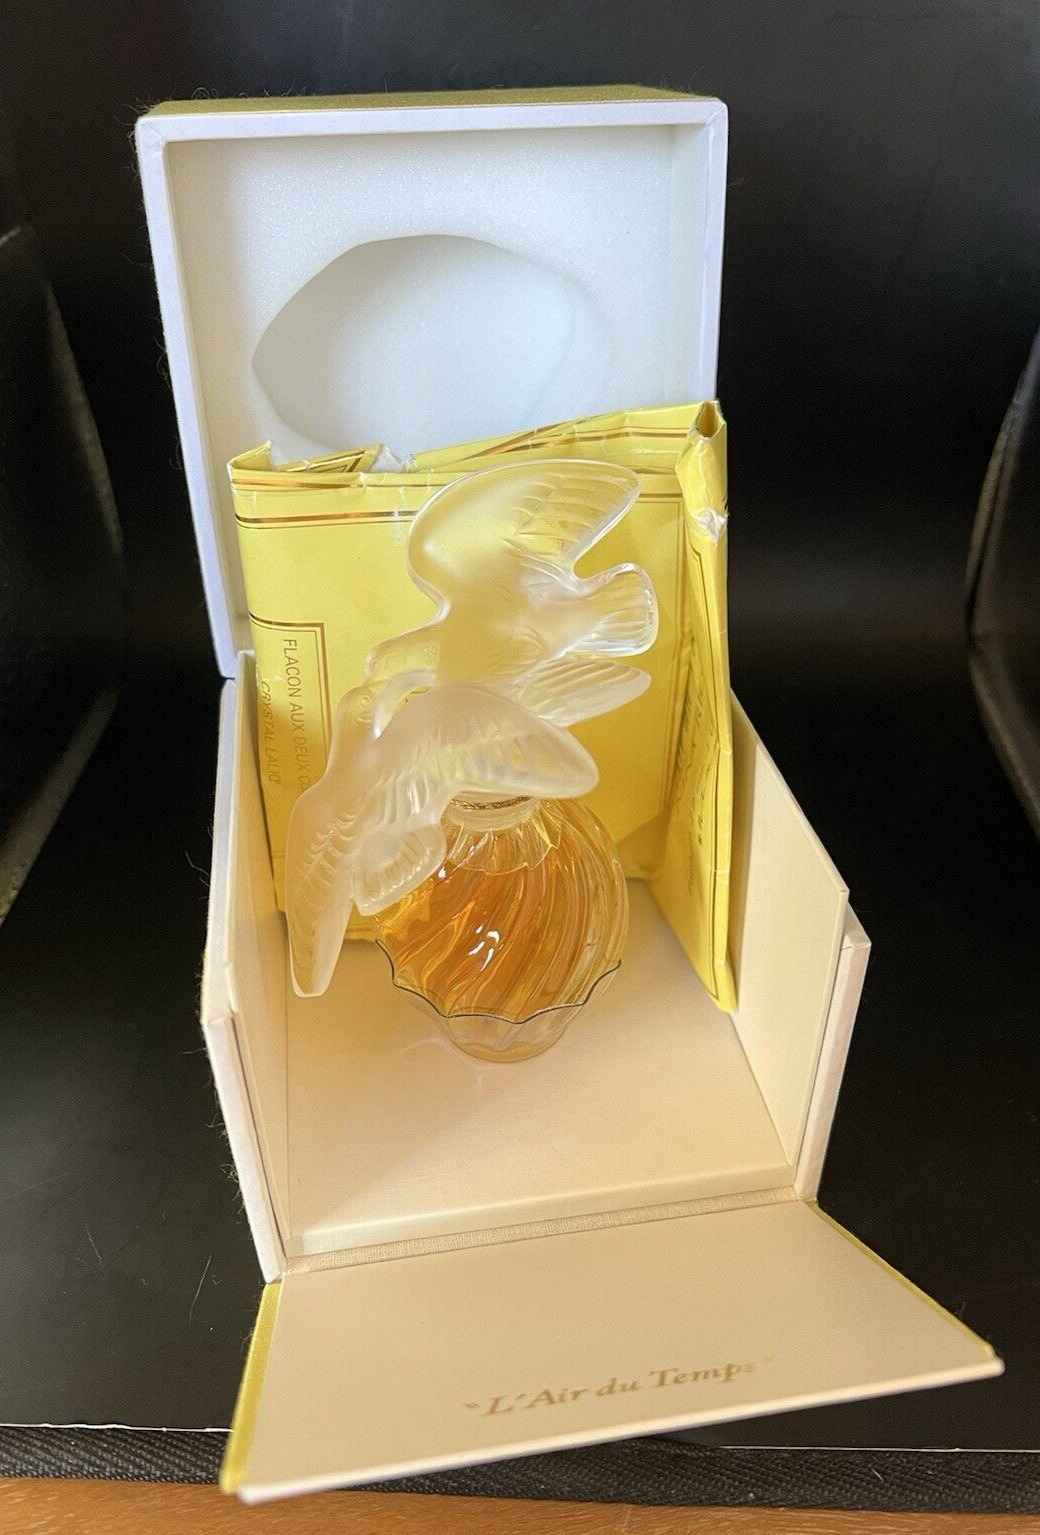 Lalique Nina Ricci Double Dove Crystal Perfume Bottle Large in Orig Box 29ml 1oz